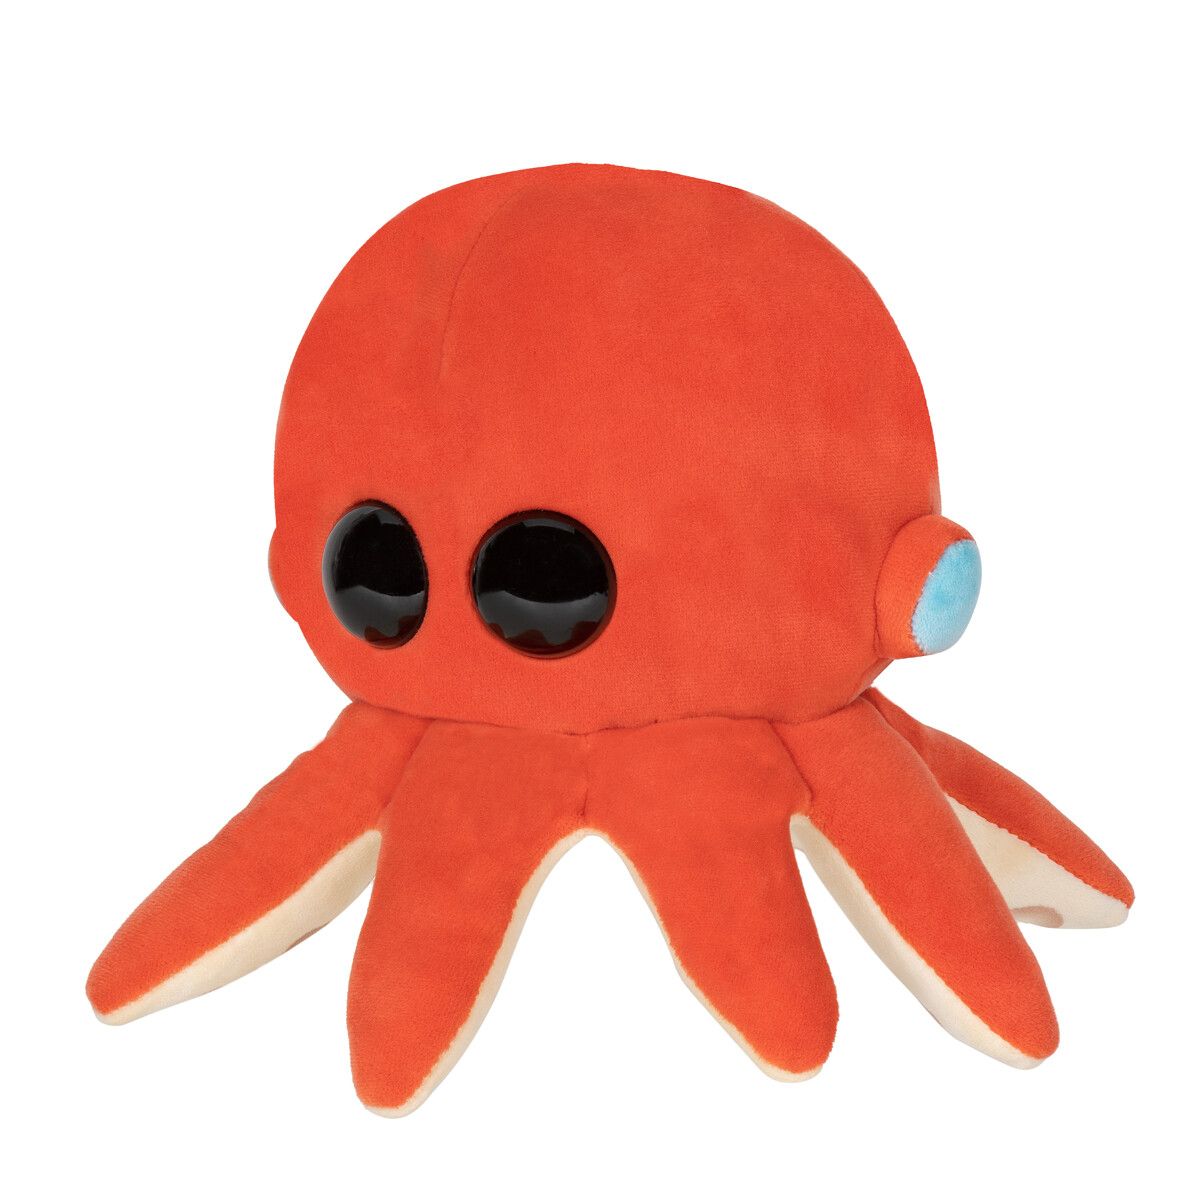 Adopt Me - Collector Plush 20 cm - Octopus - Leker